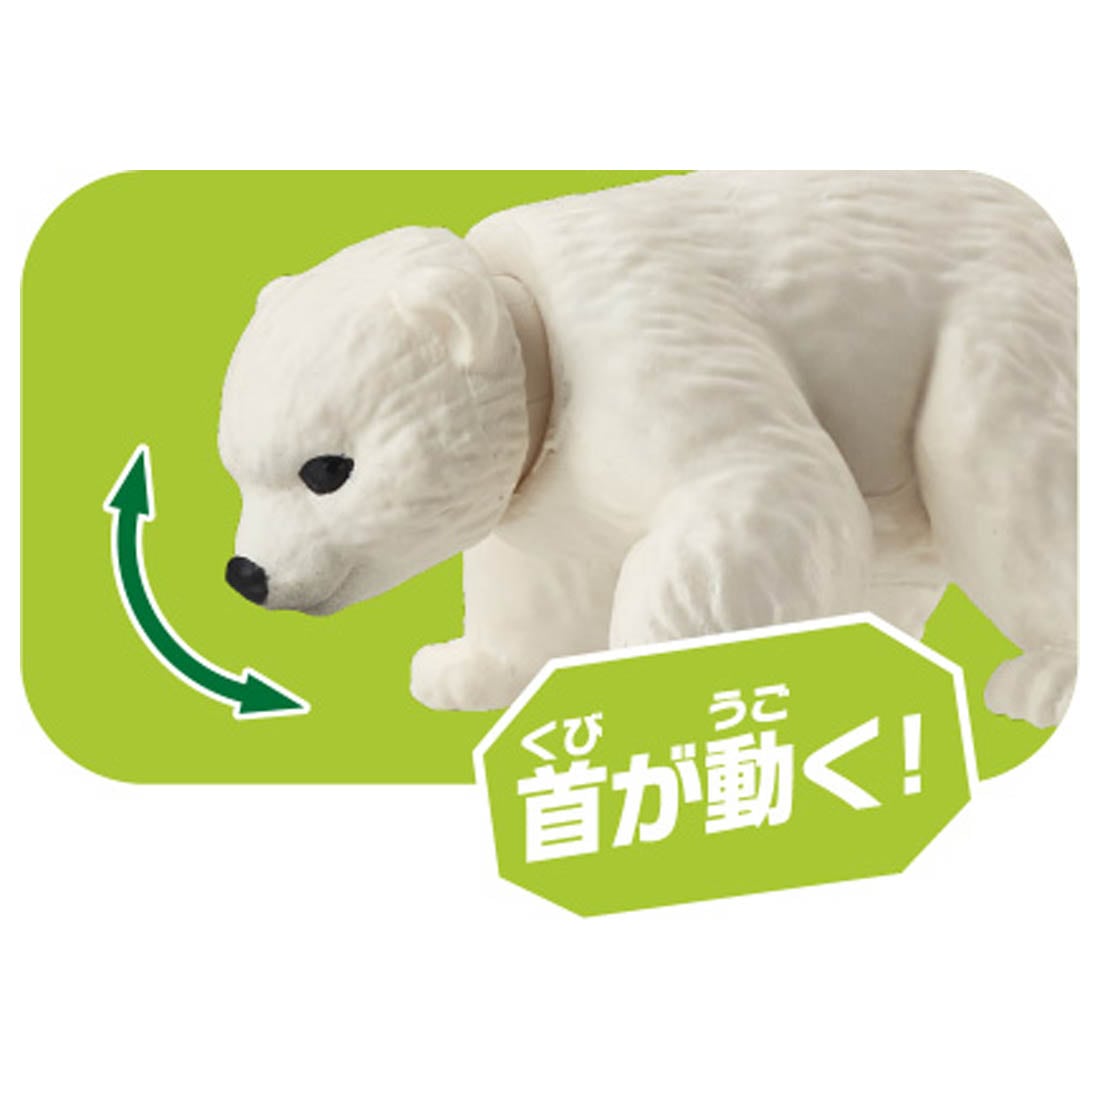 TOMY 動物模型 AC-10 北極熊